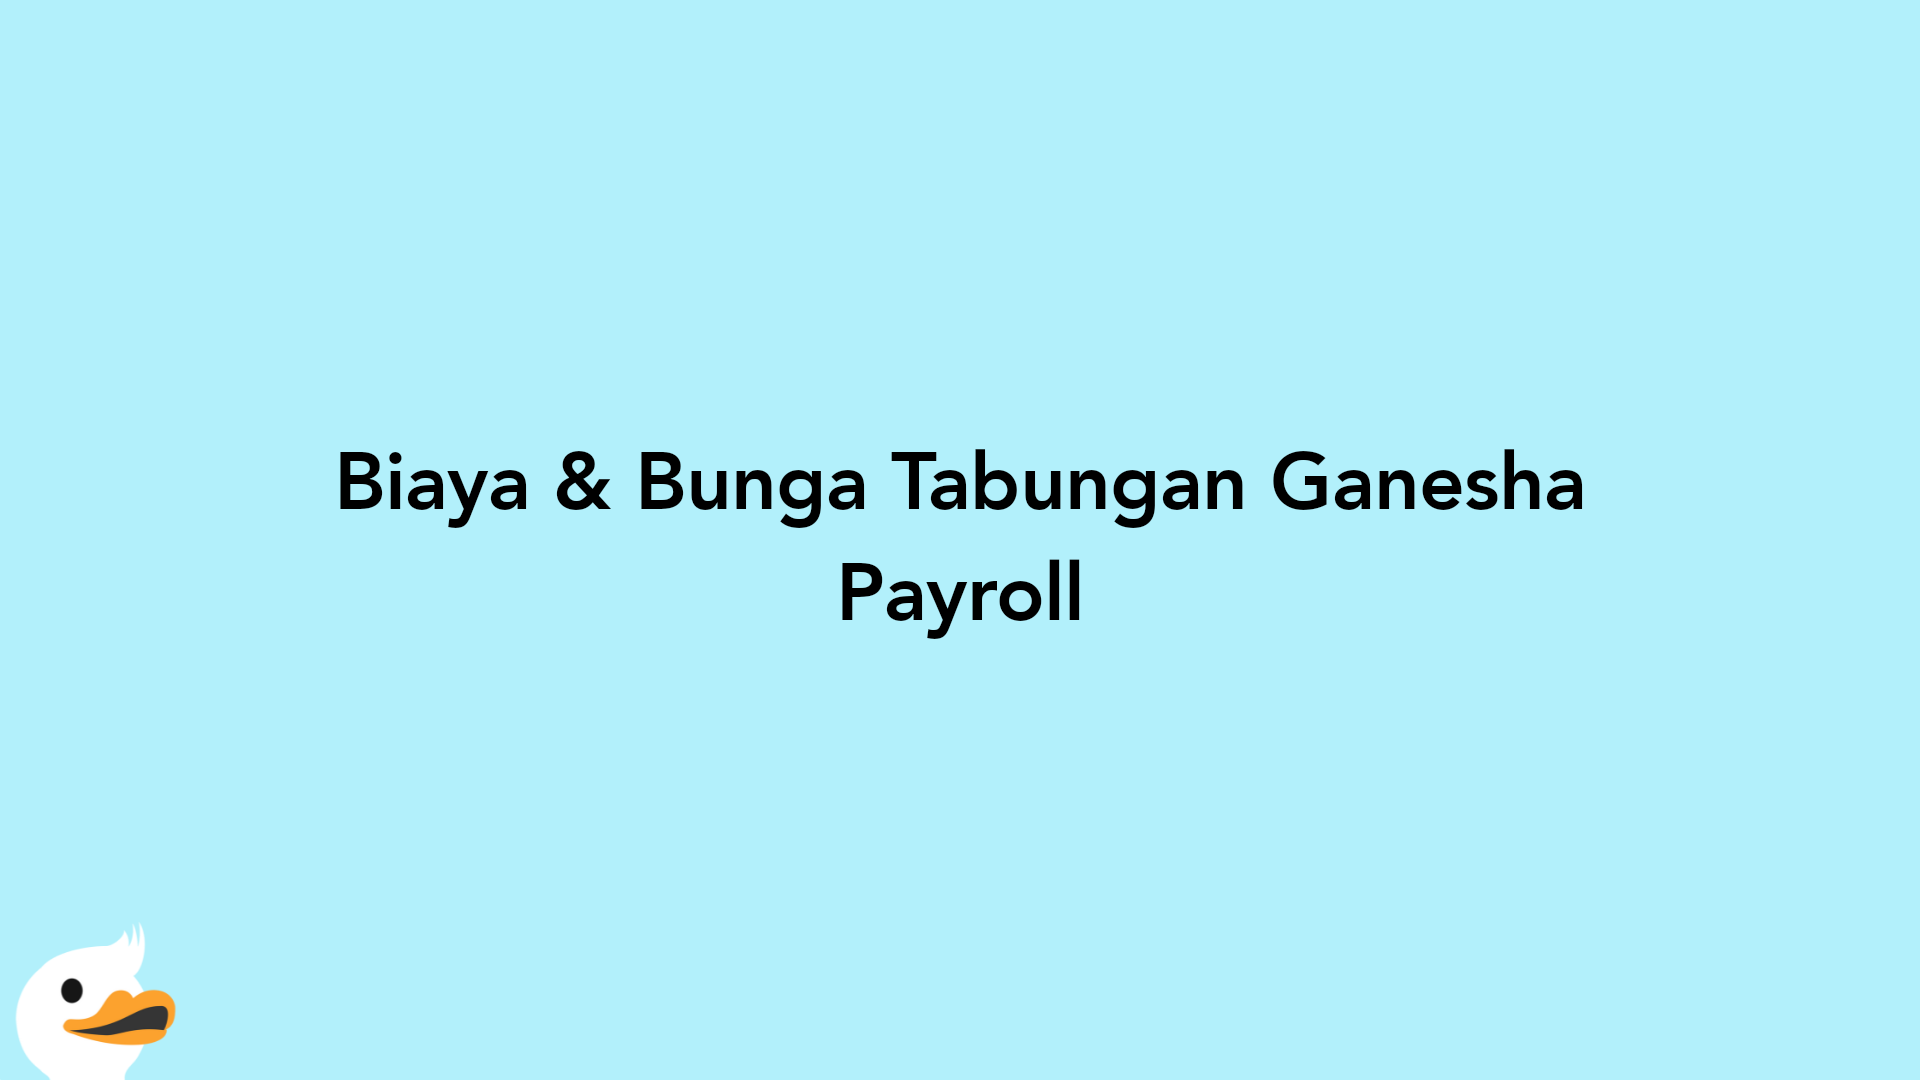 Biaya & Bunga Tabungan Ganesha Payroll